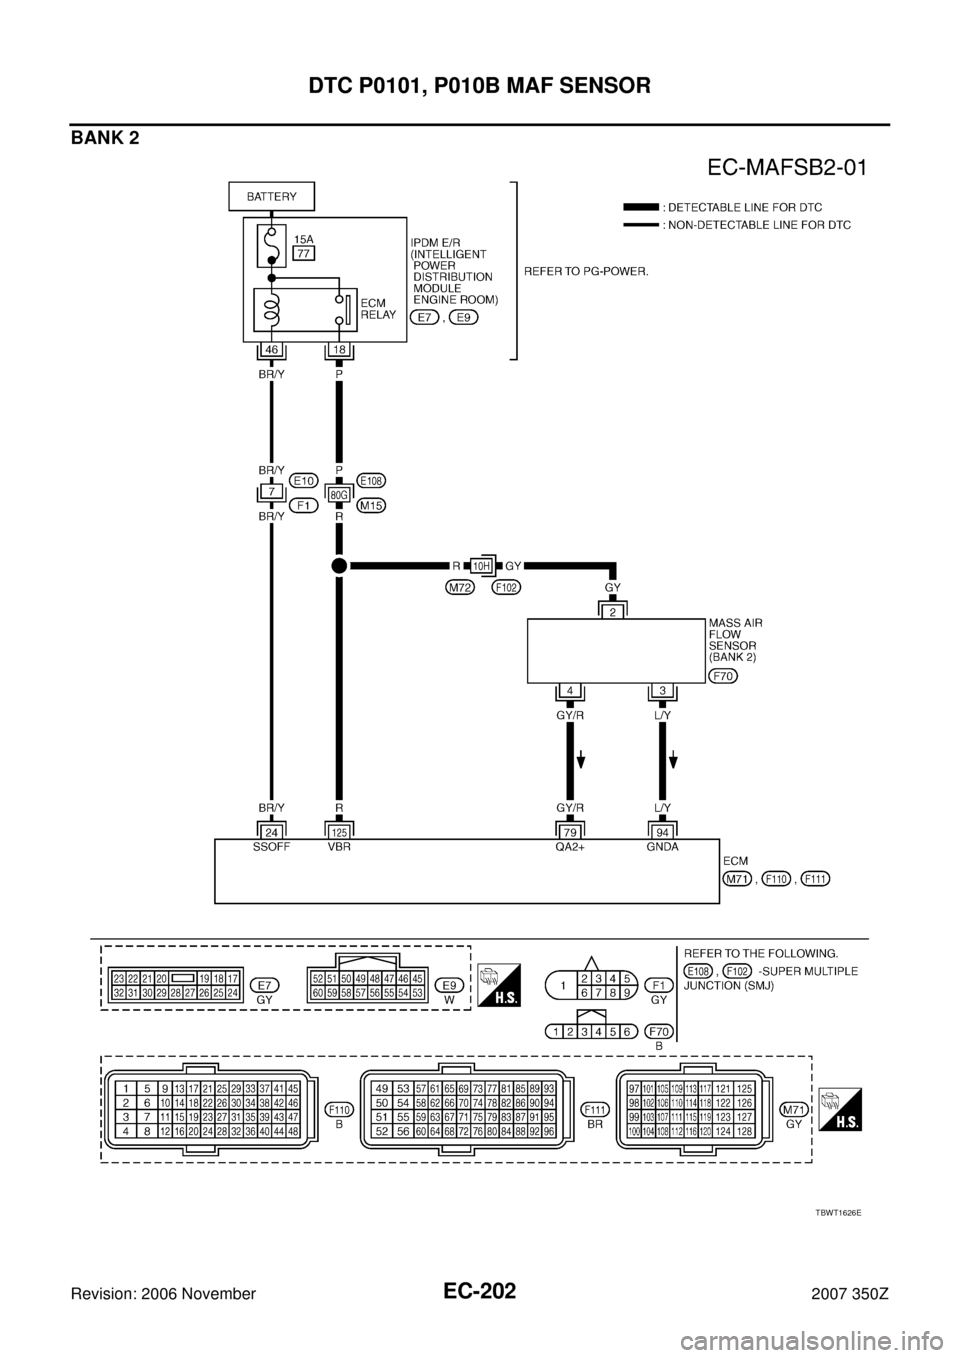 NISSAN 350Z 2007 Z33 Engine Control Service Manual EC-202
DTC P0101, P010B MAF SENSOR
Revision: 2006 November2007 350Z
BANK 2
TBWT1626E 